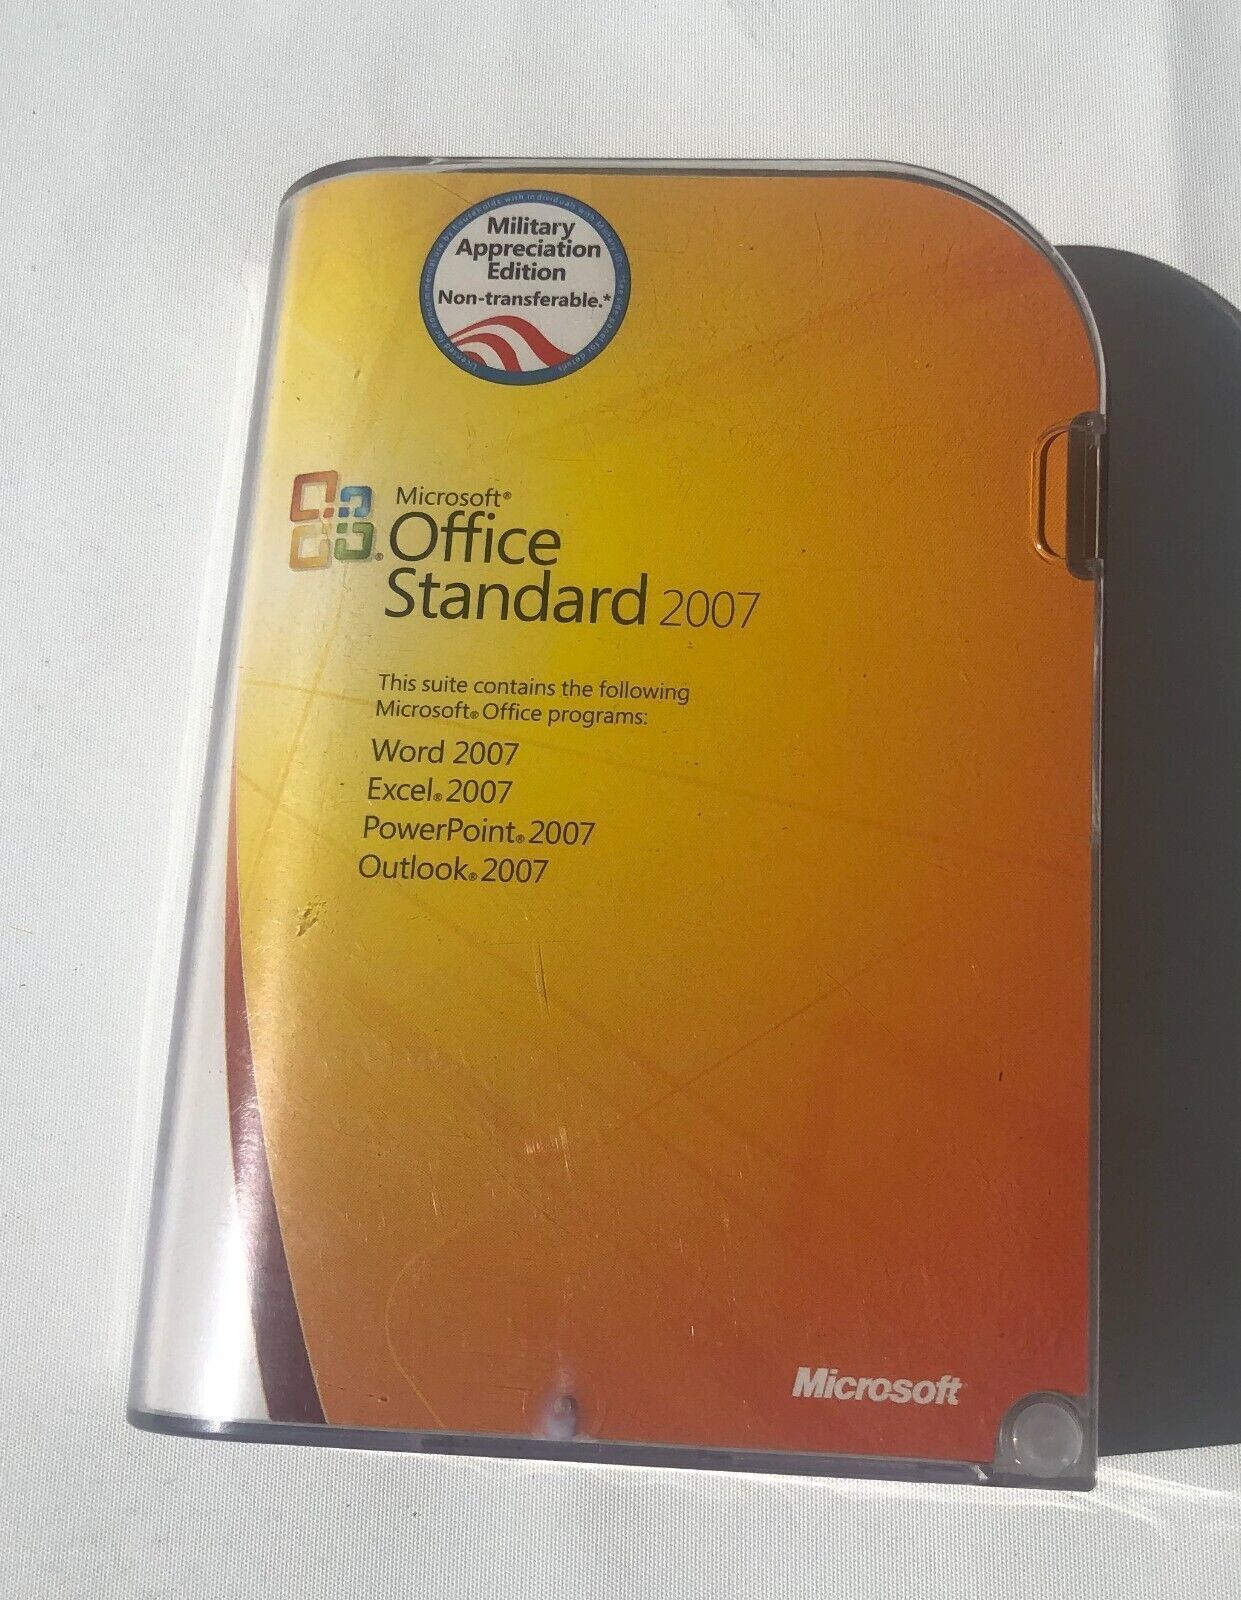 Microsoft Office 2007 Standard - Military Appreciation Edition